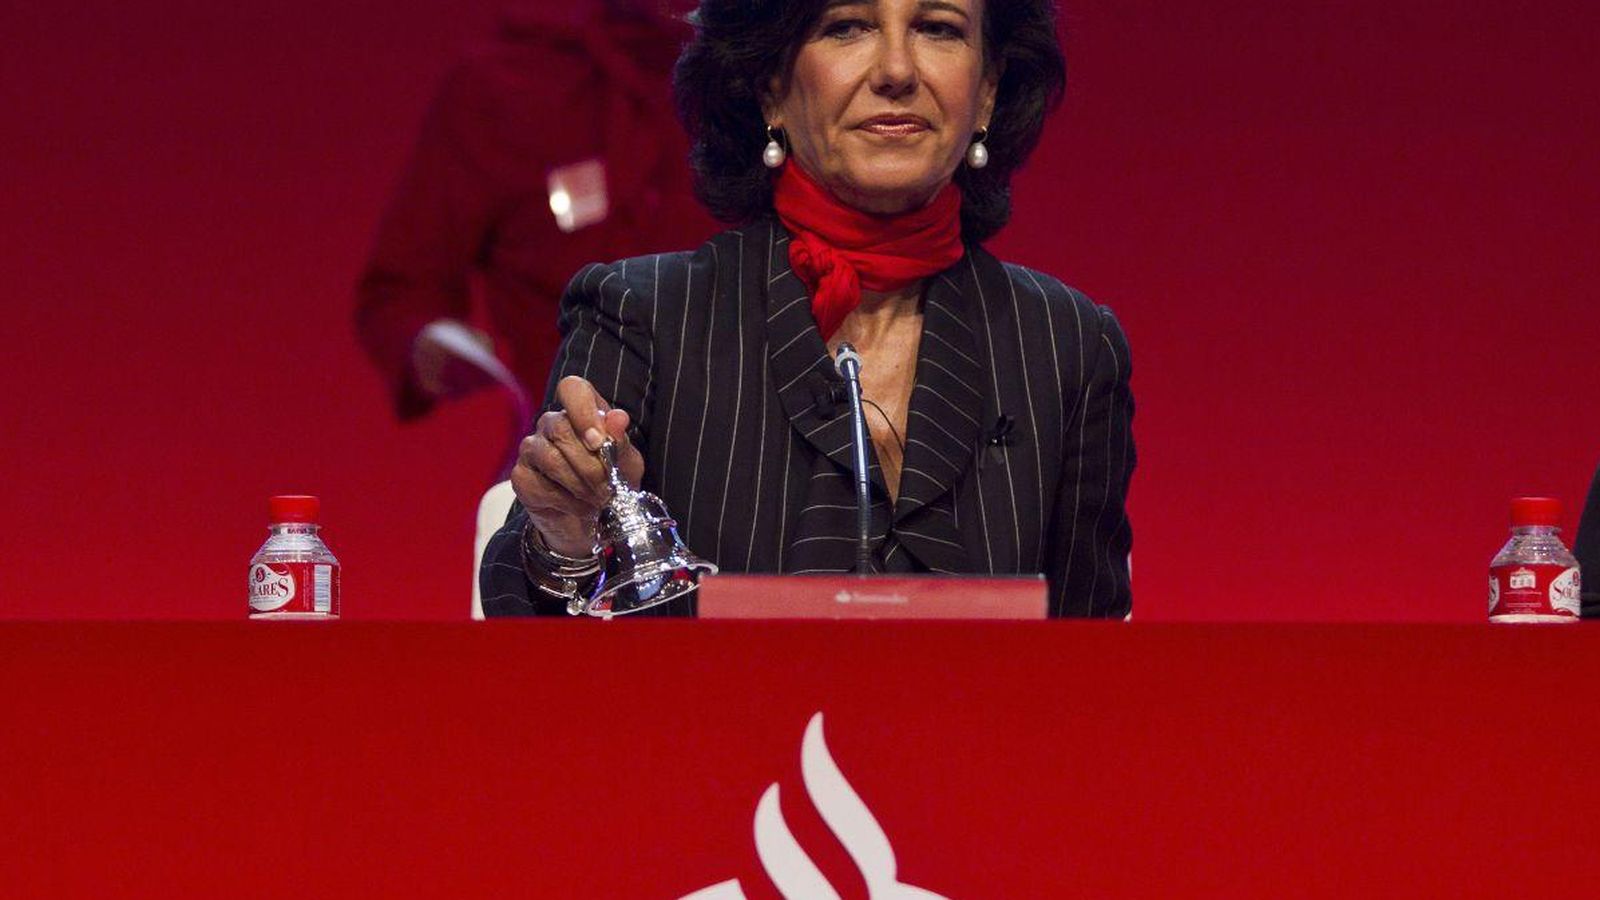 Foto: La presidenta del Santander, Ana Botín. (EFE)